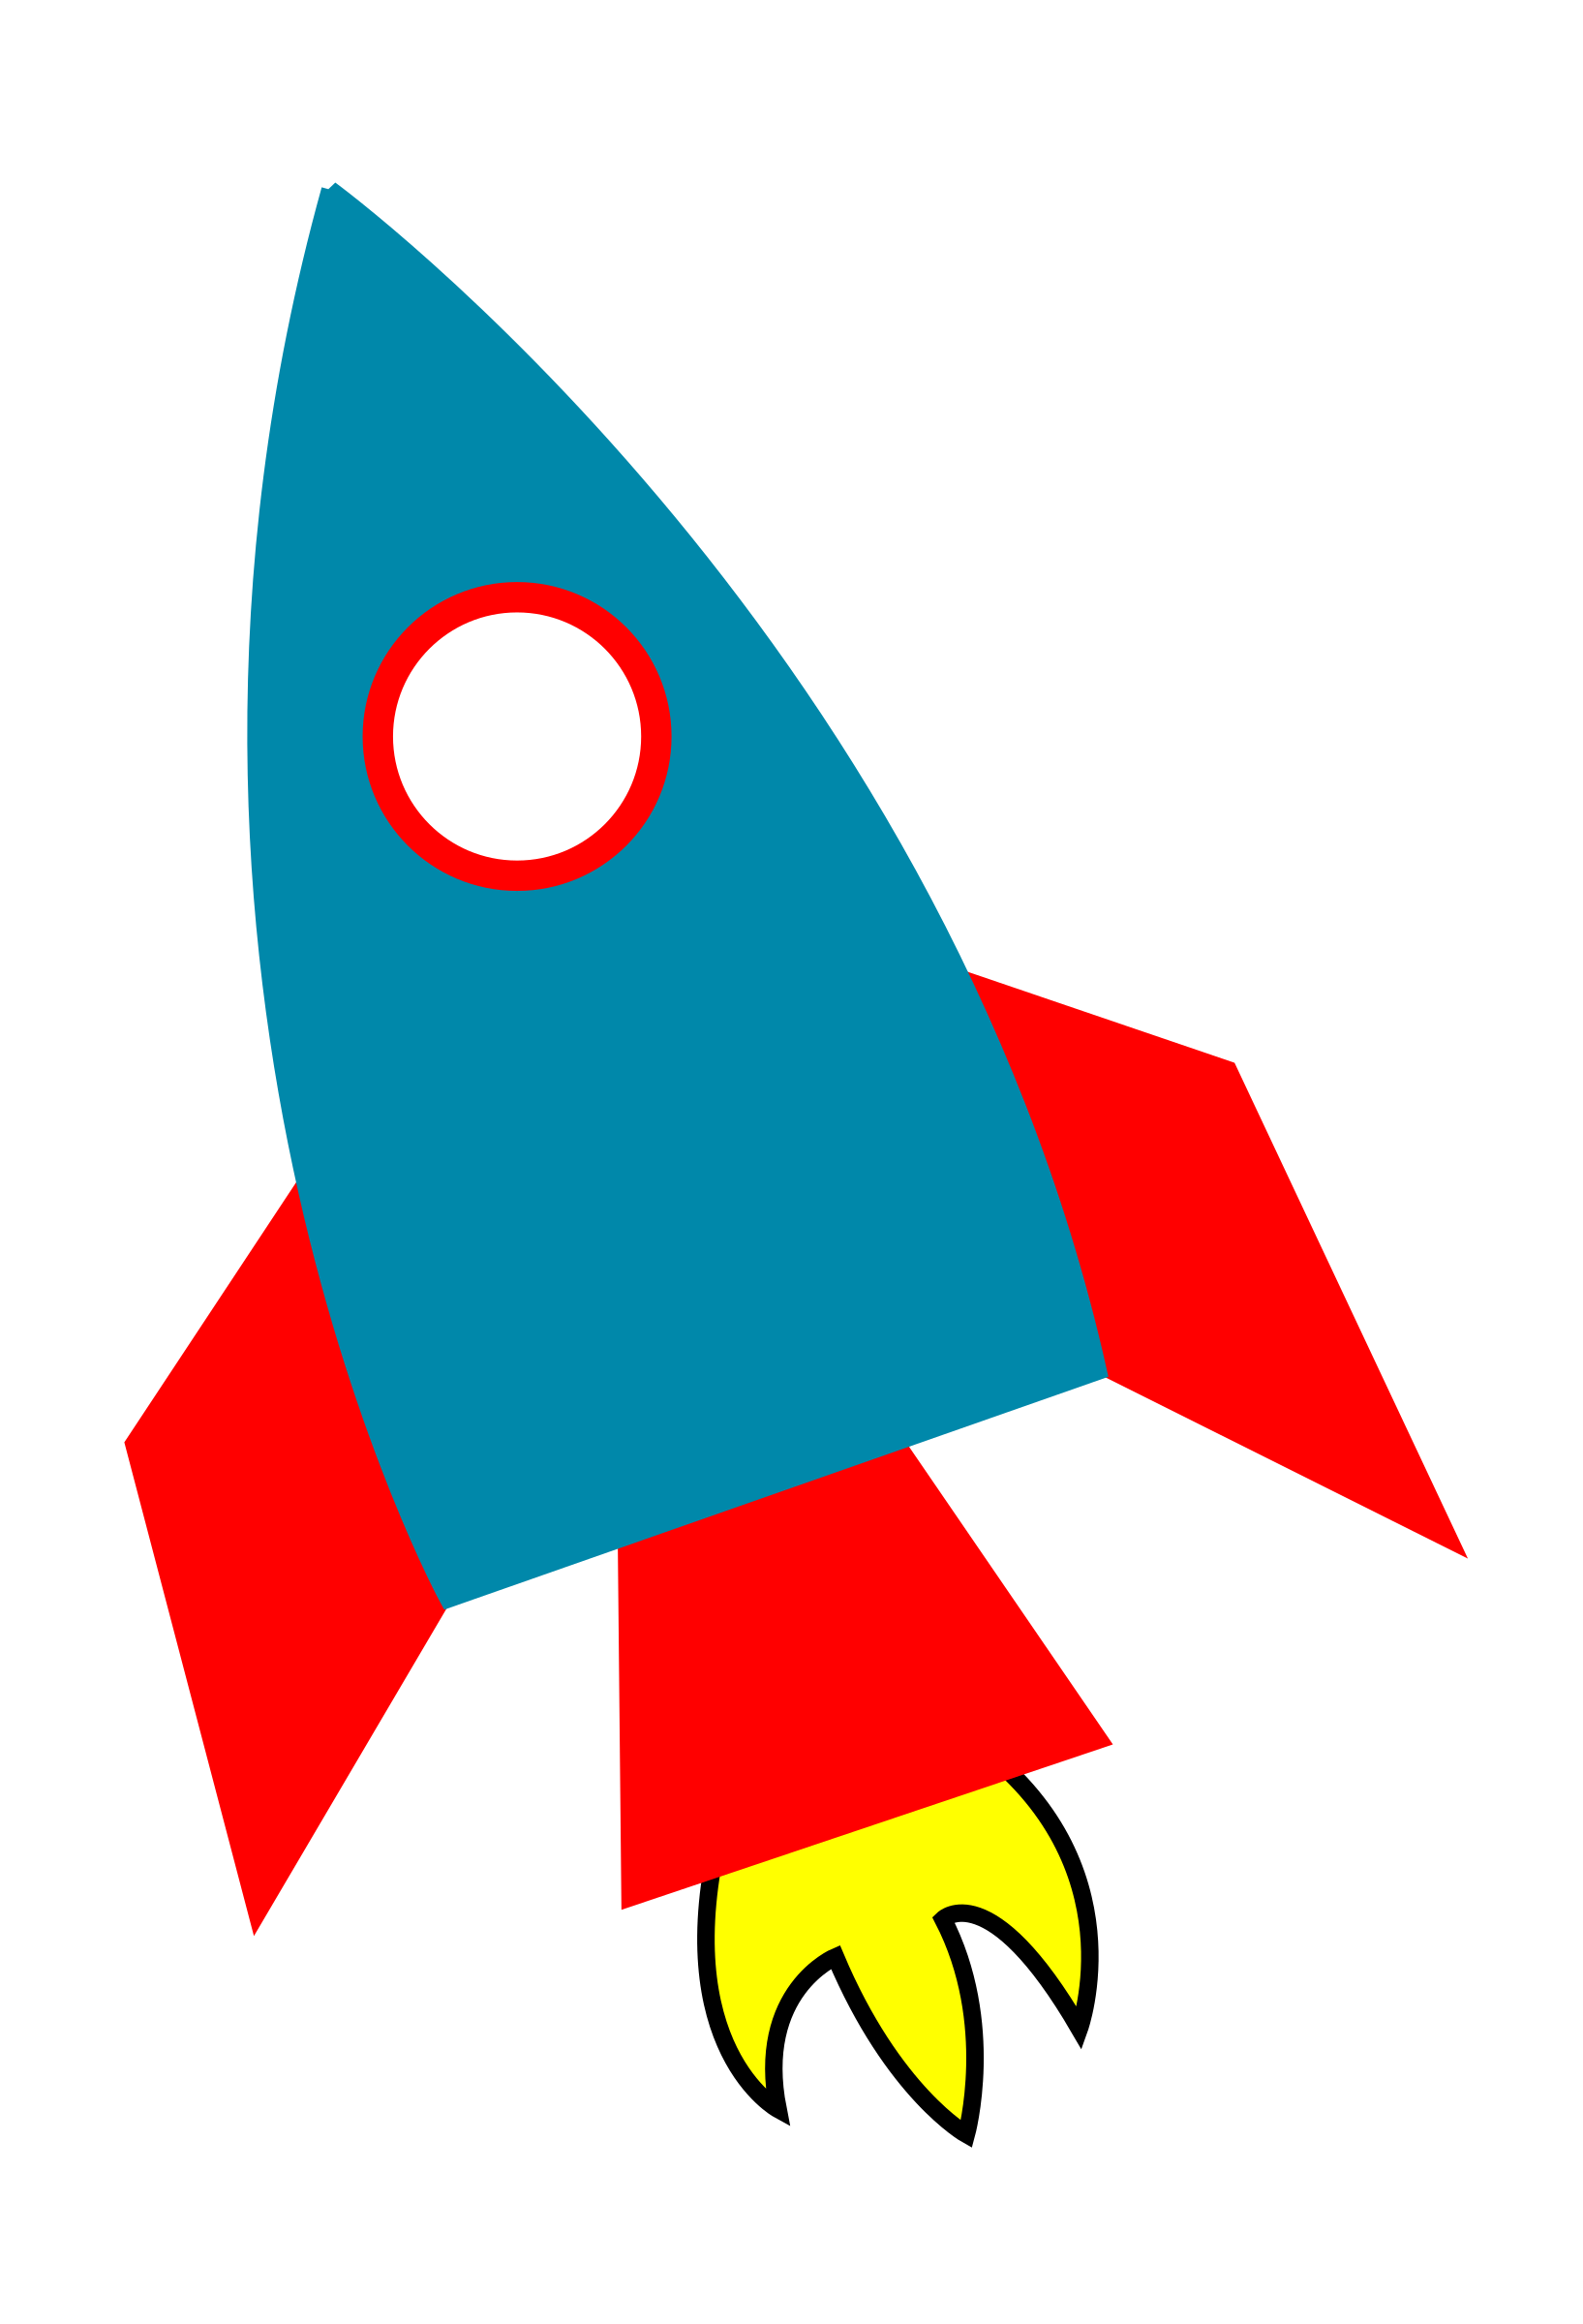 Clipart rocket simple rocket, Clipart rocket simple rocket